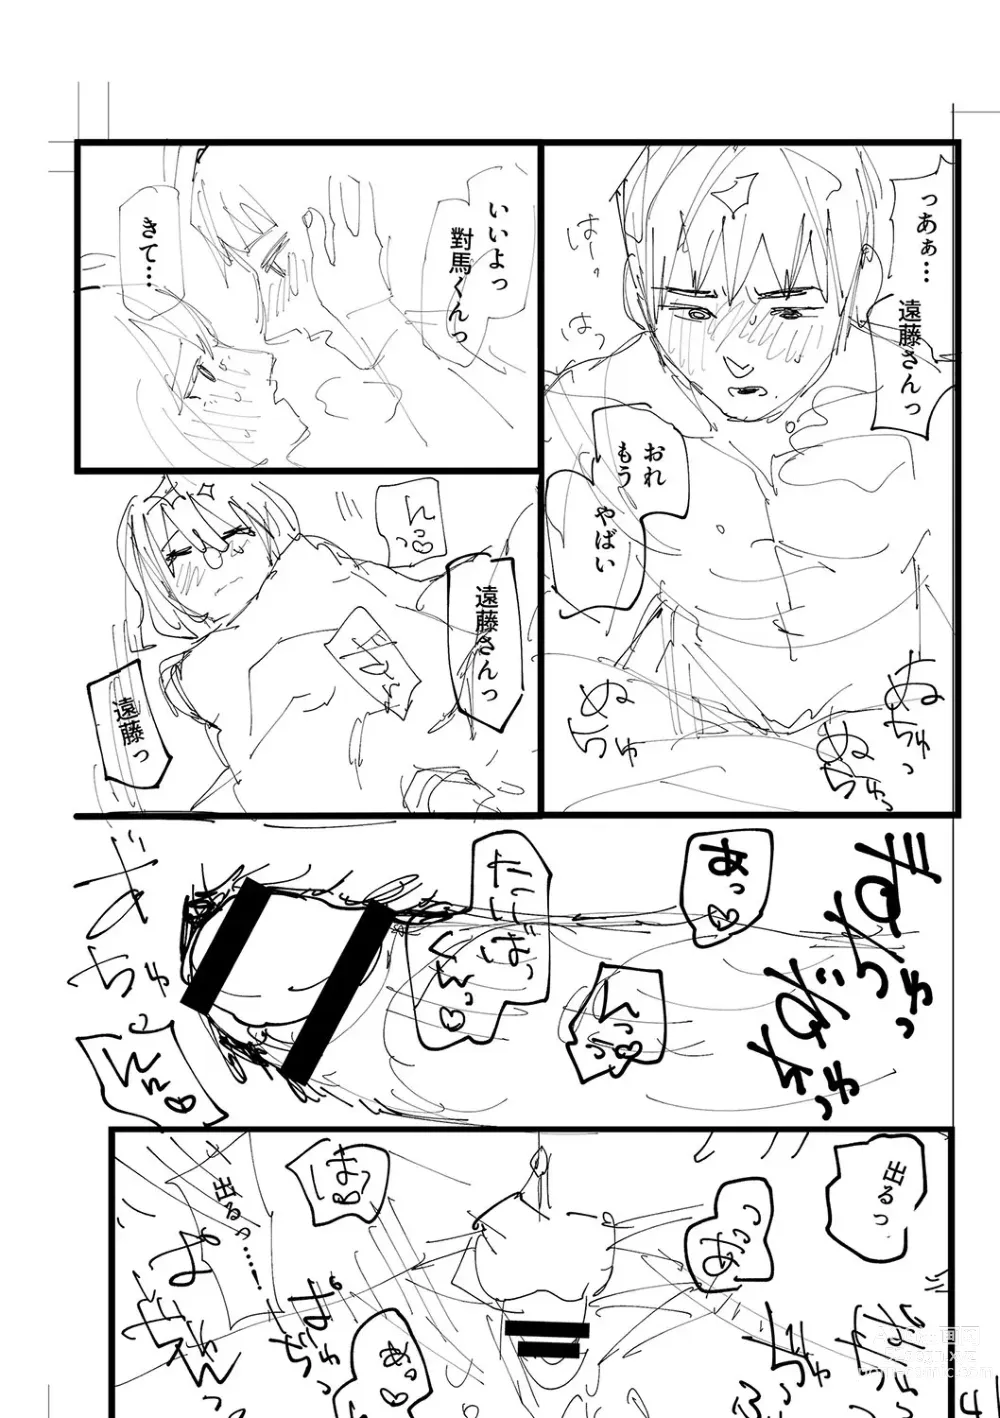 Page 254 of manga Oyasumi, Teen - Good Night, Goodbye